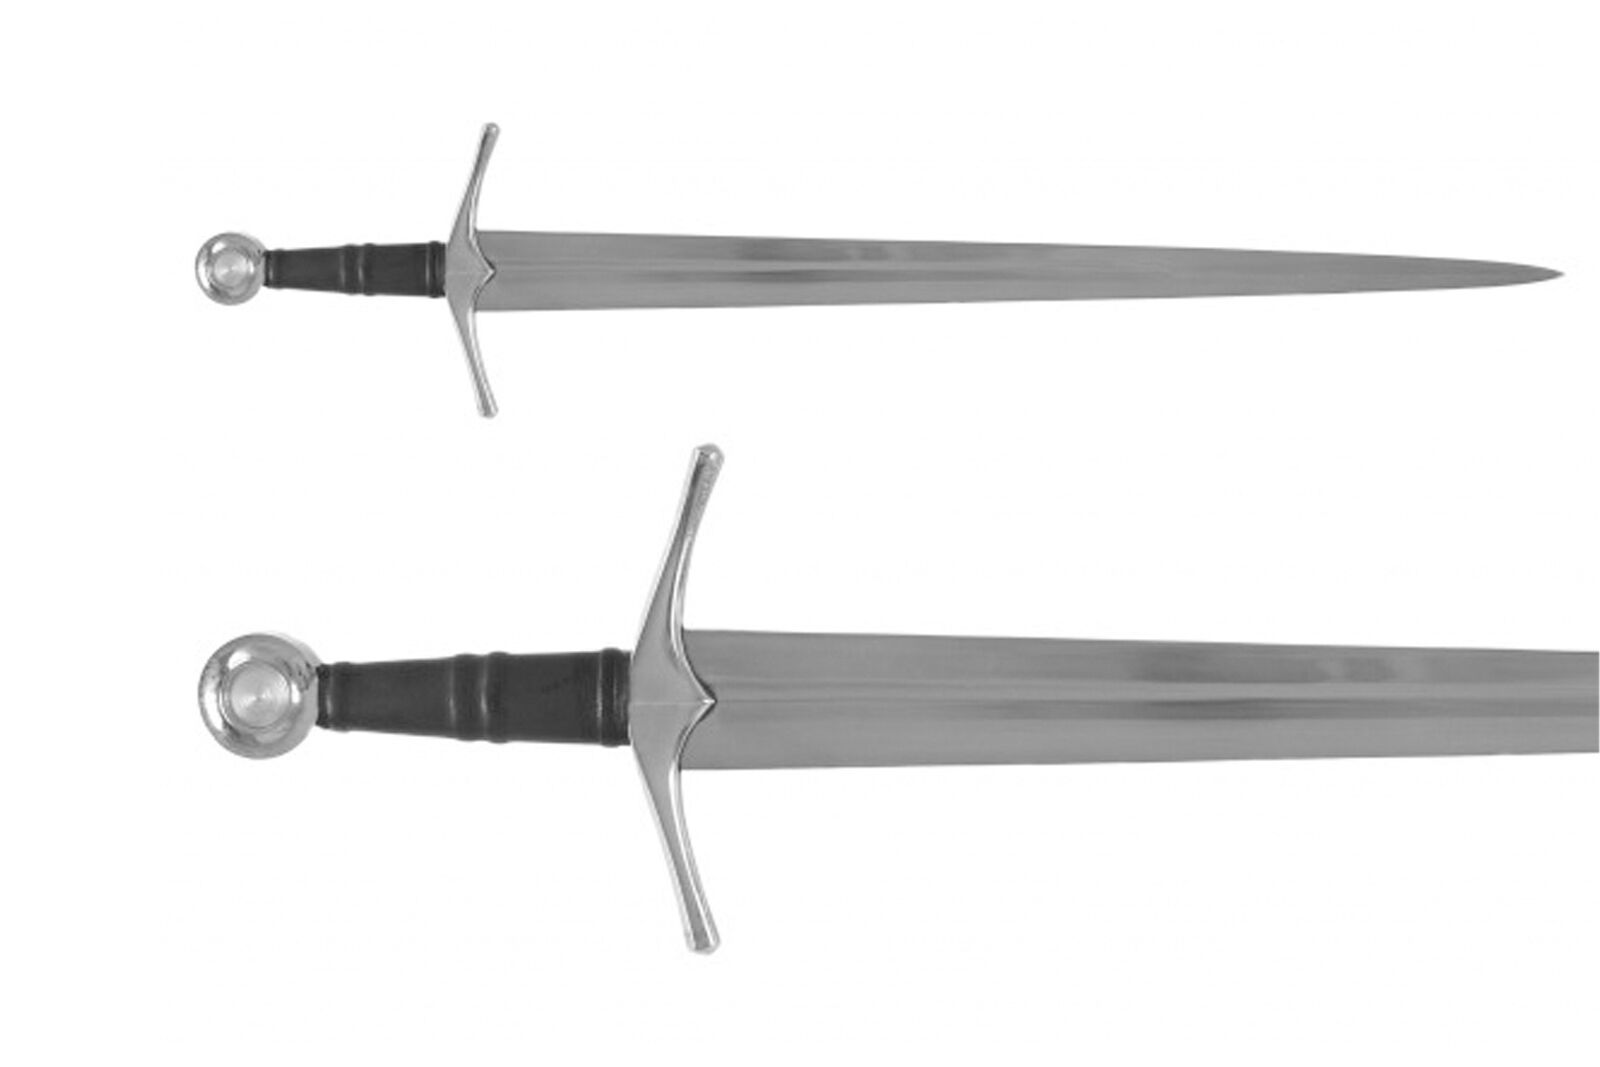 Medieval one-handed sword